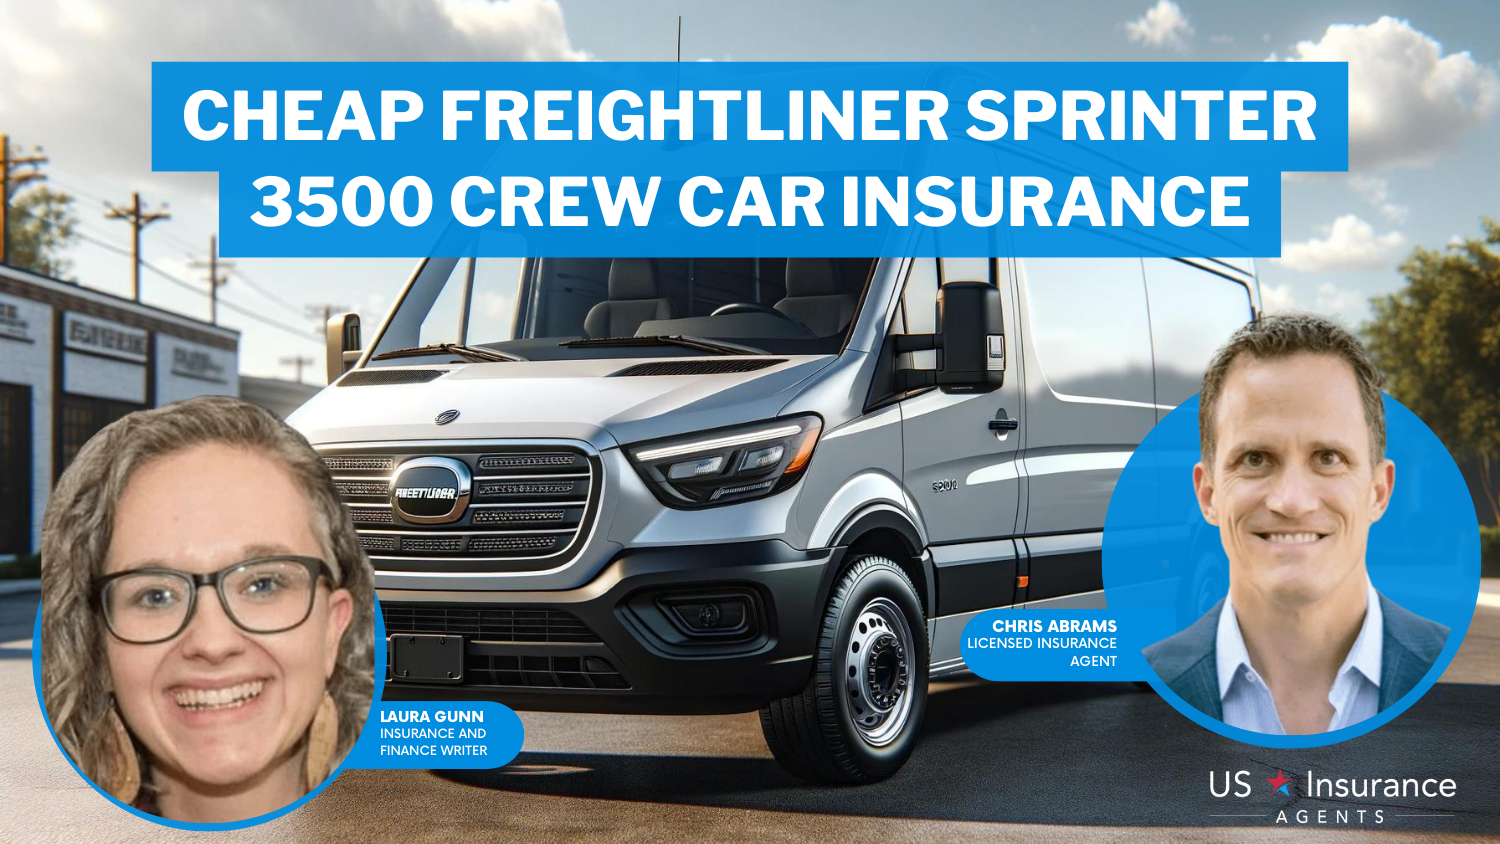 Geico, Progressive, State Farm: Cheap Freightliner Sprinter 3500 Crew Car Insurance